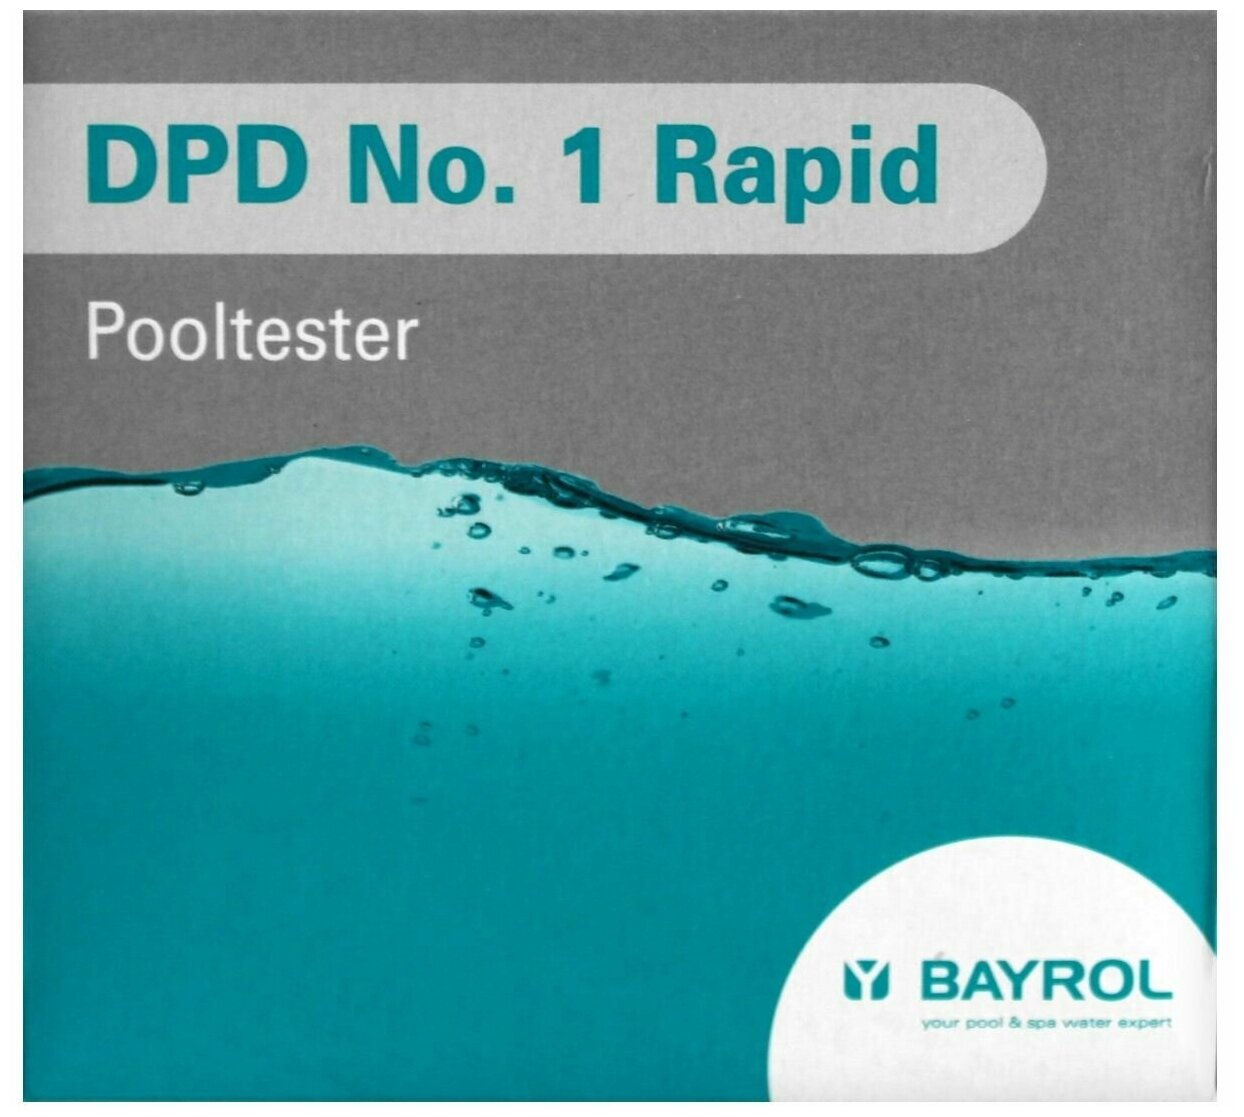 Таблетки DPD №1 Rapid Bayrol (для тестера Pooltester) - 10 шт., арт. 287151 - фотография № 2